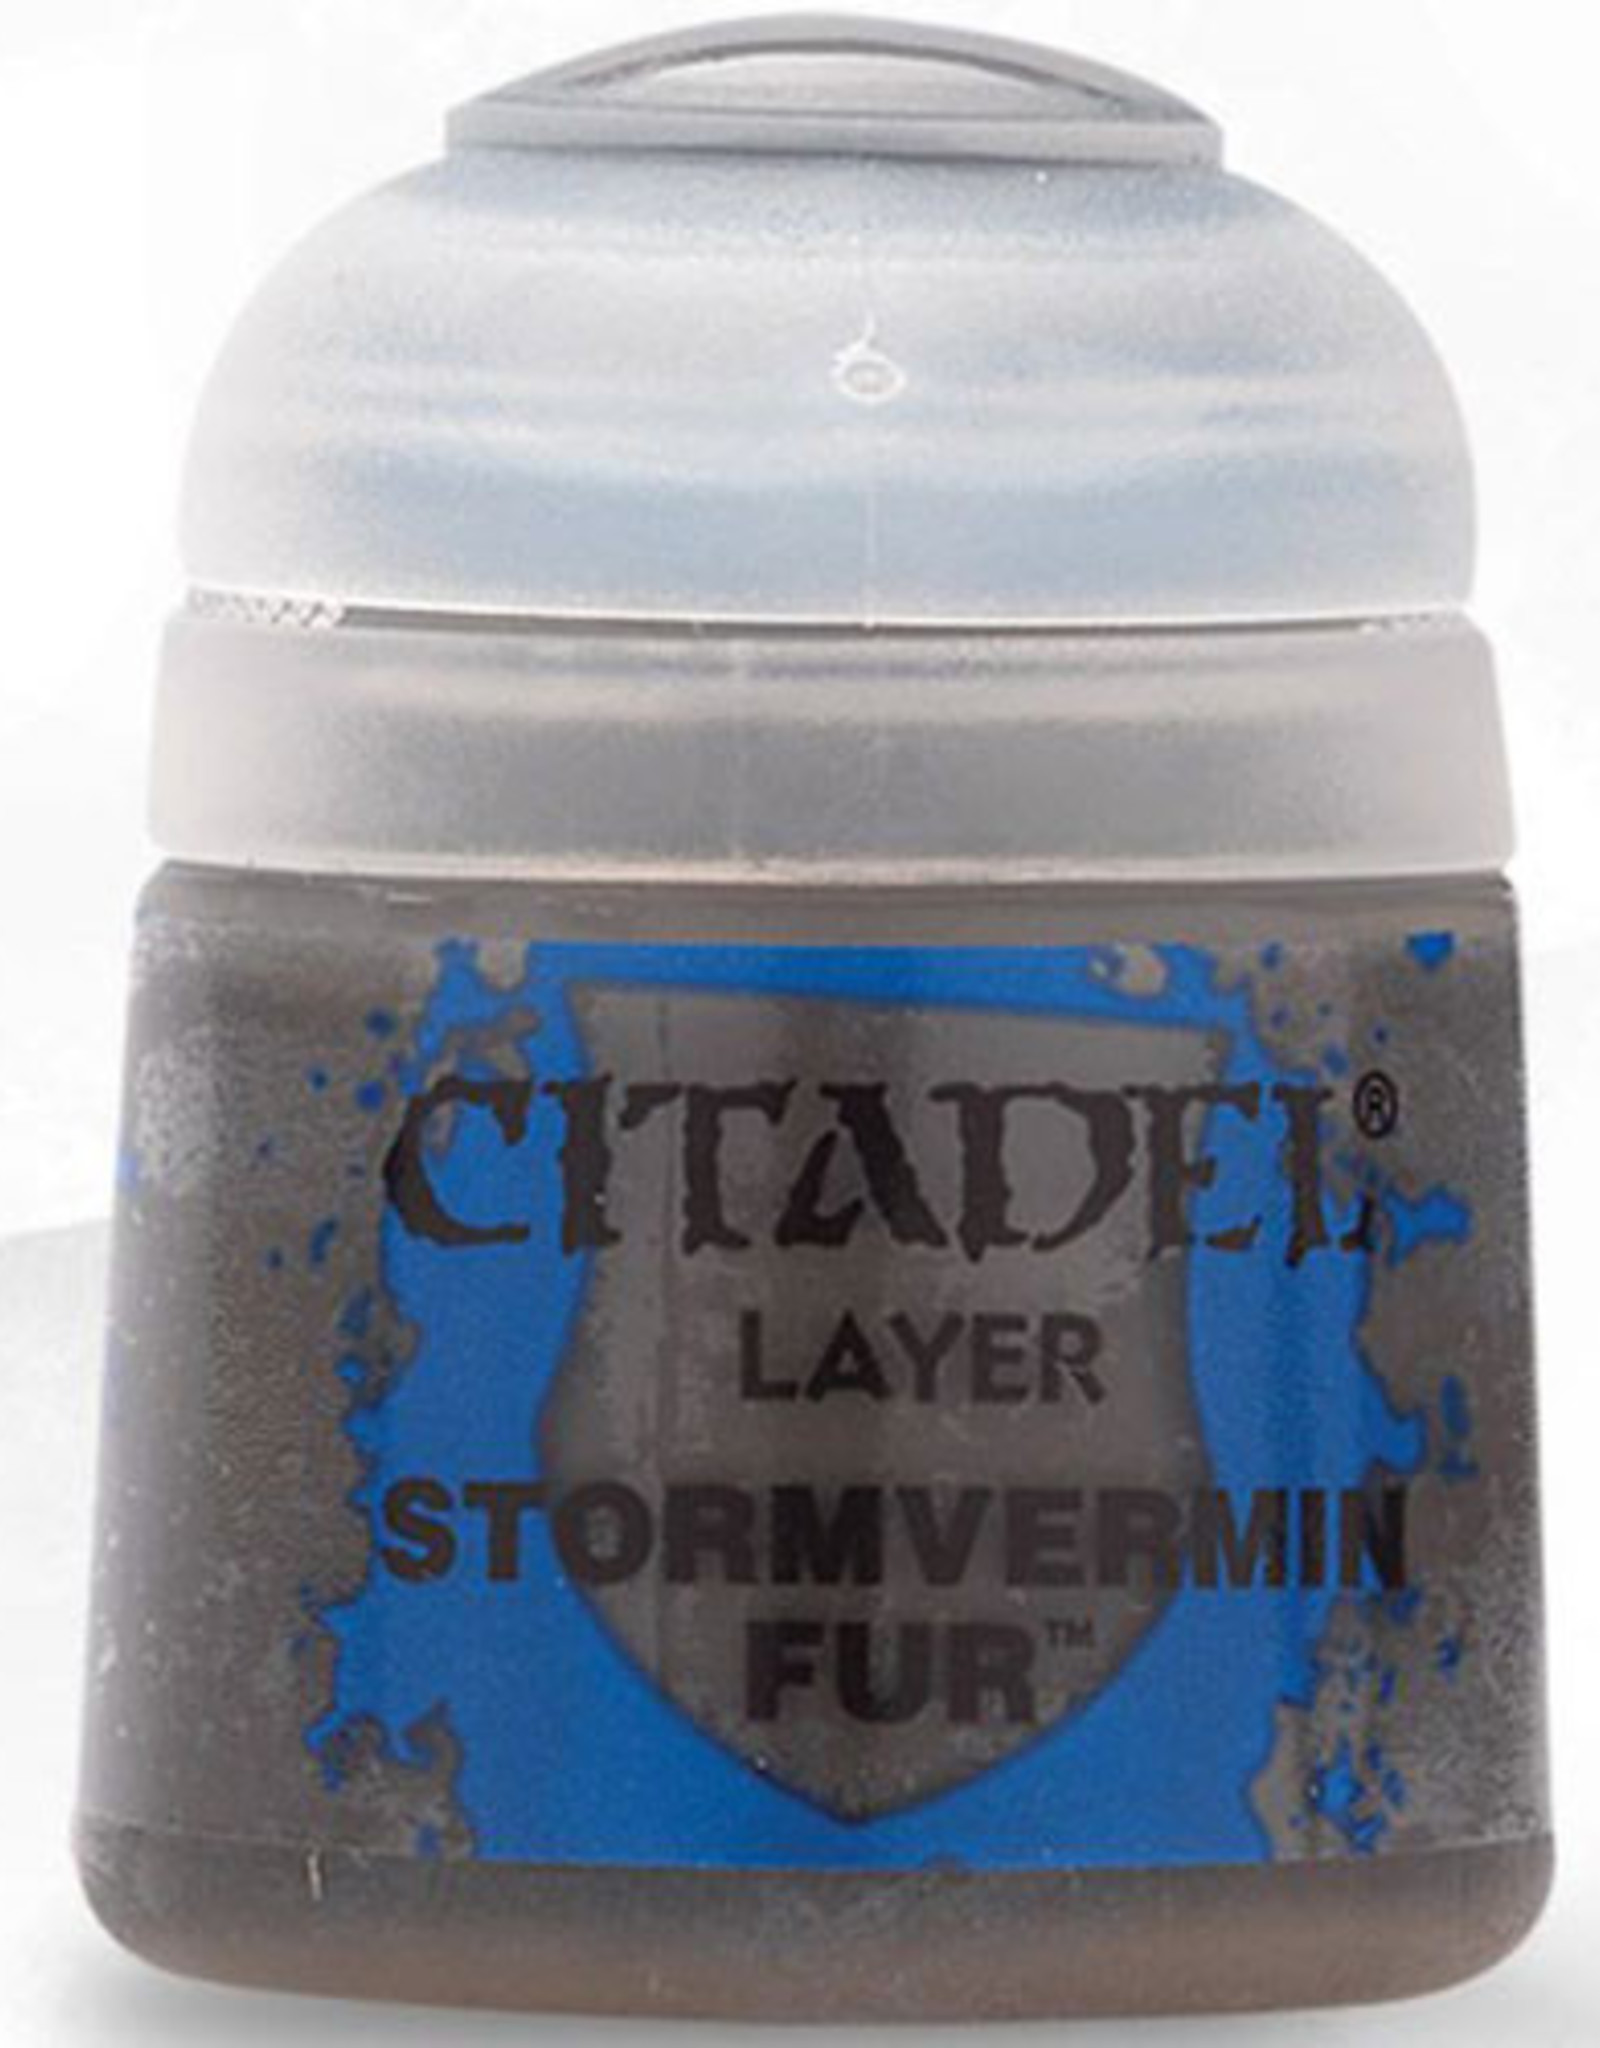 Games Workshop Citadel Layer: Stormvermin Fur